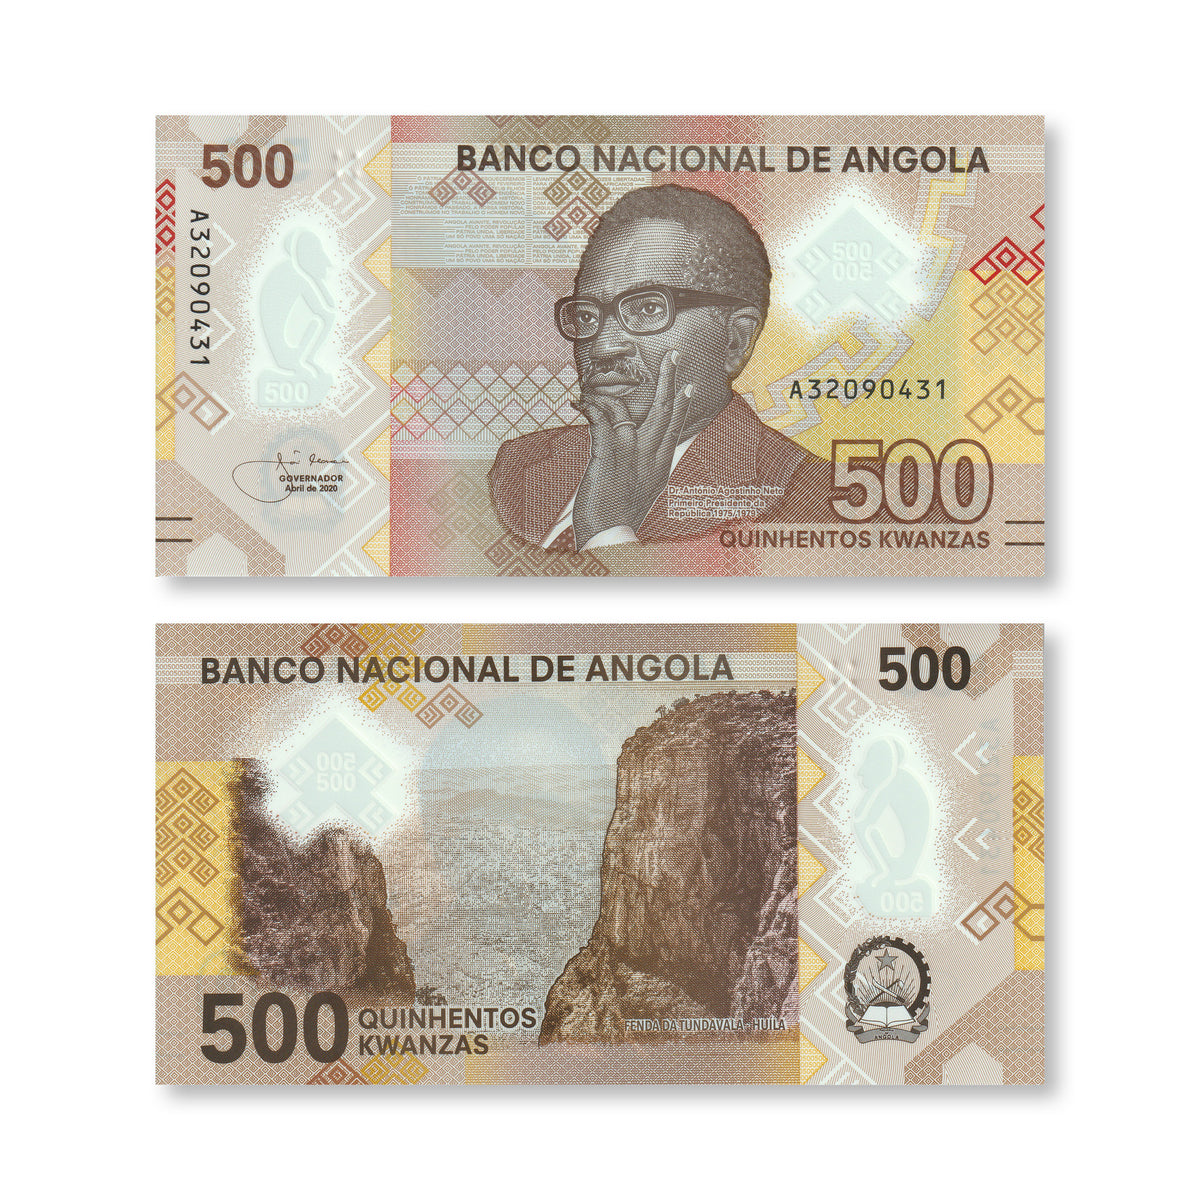 Angola 500 Kwanzas, 2020, B558a, UNC - Robert's World Money - World Banknotes